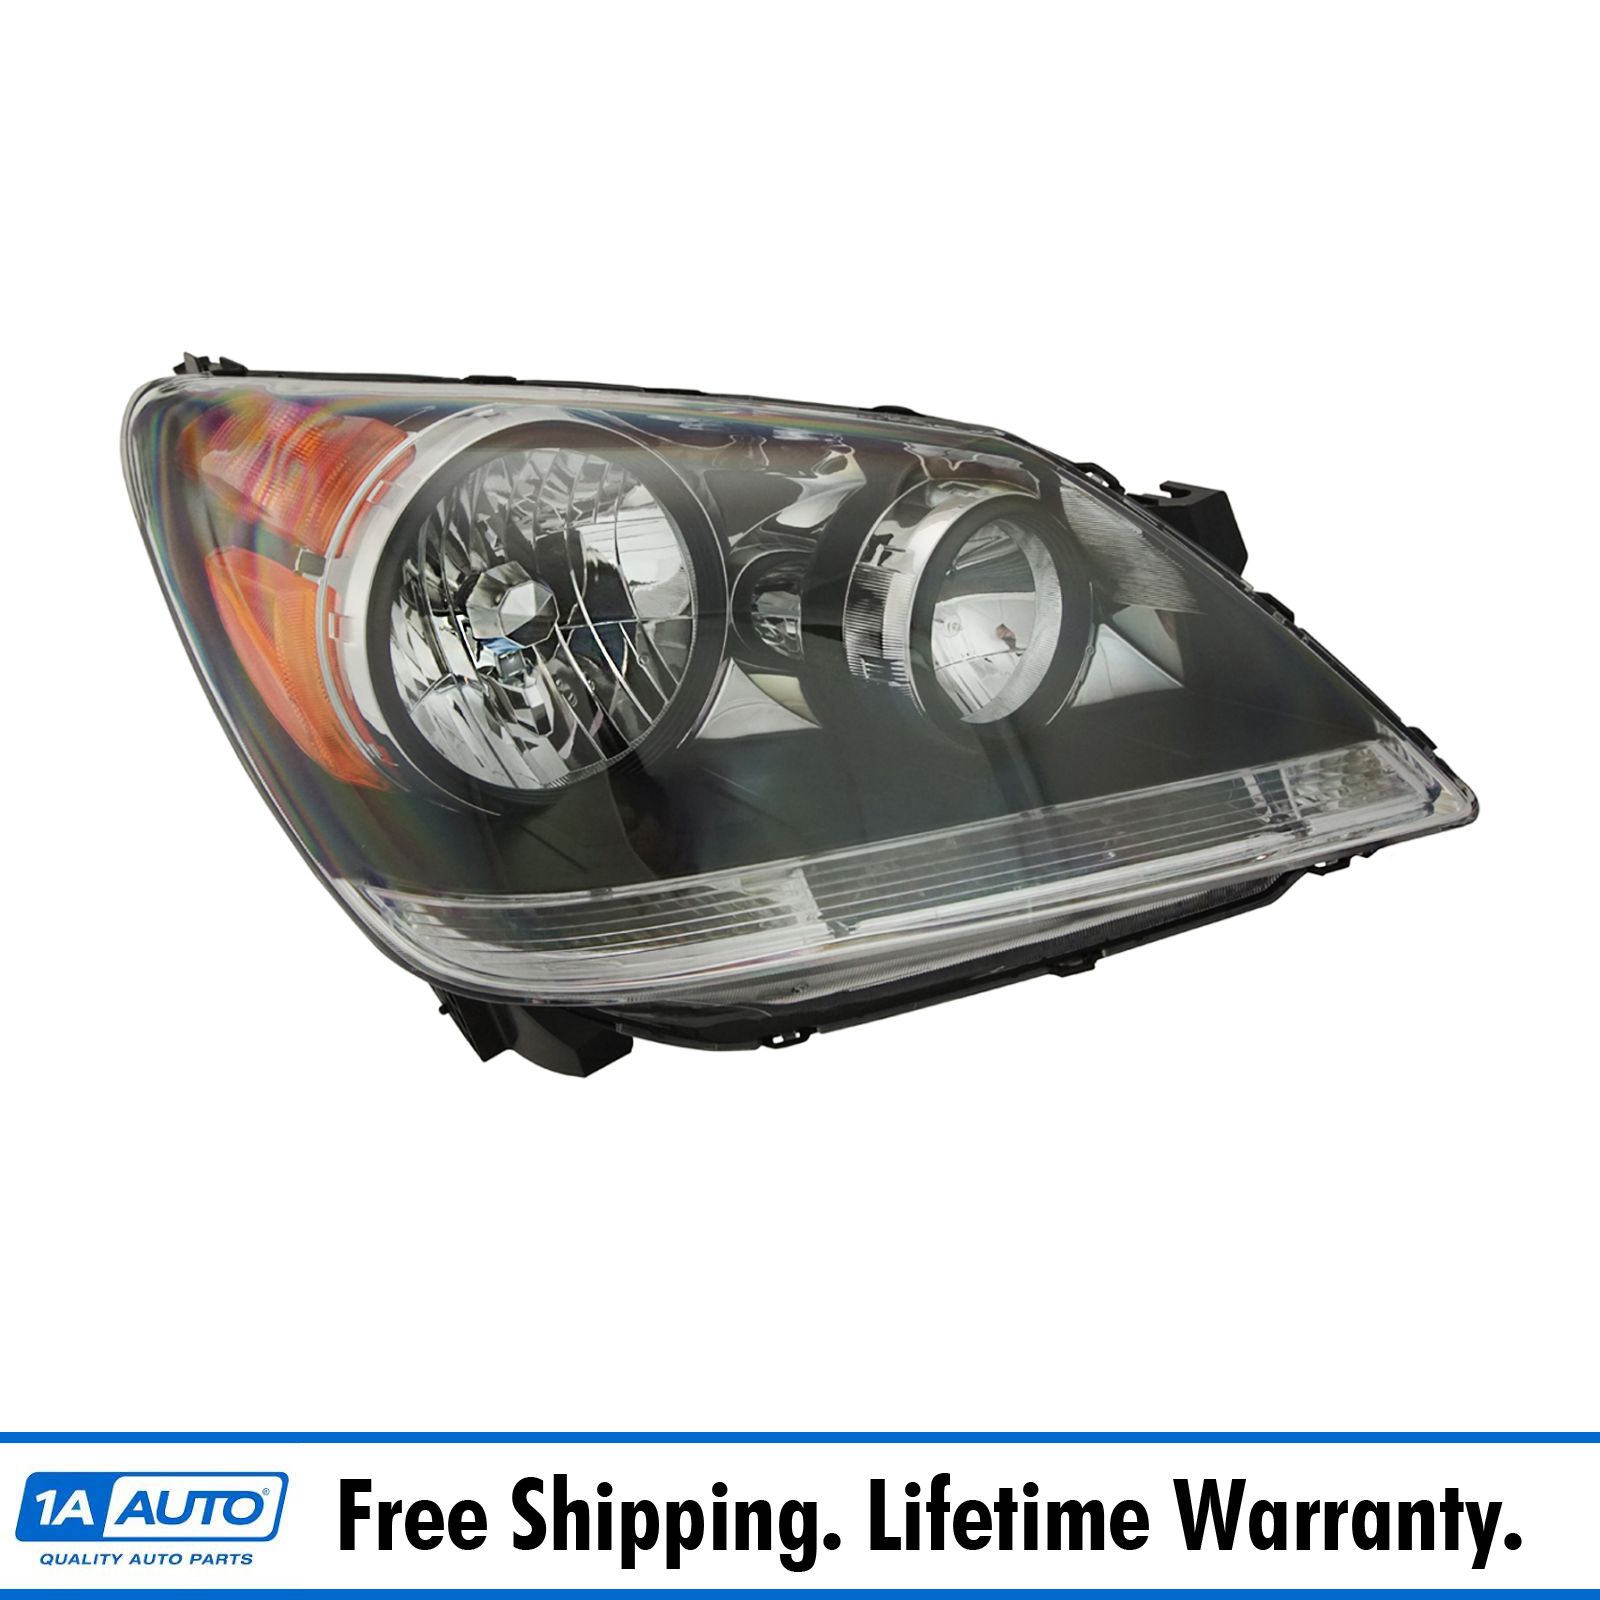 Headlight Headlamp Passenger Side Right RH New for 08 10 Honda Odyssey | eBay1600 x 1600